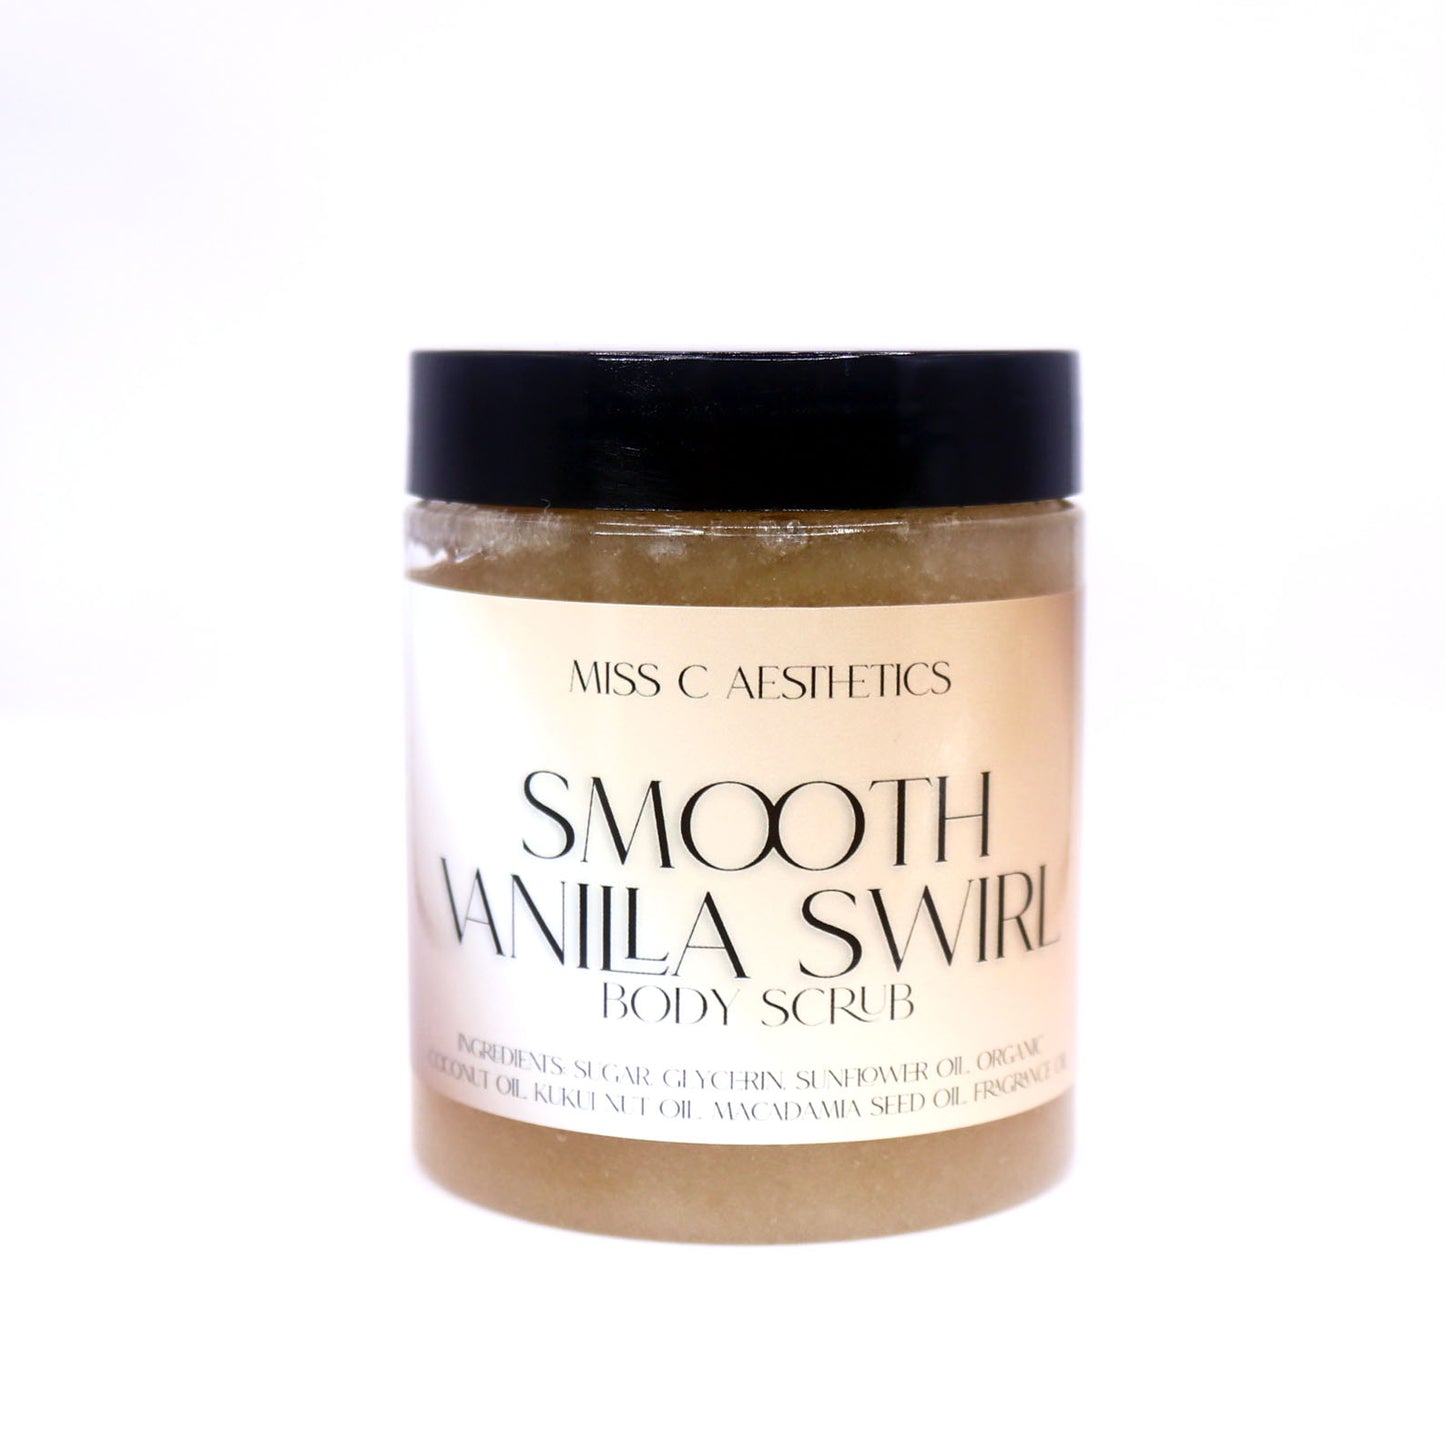 "Smooth Vanilla Swirl" Exfoliating Sugar Scrub